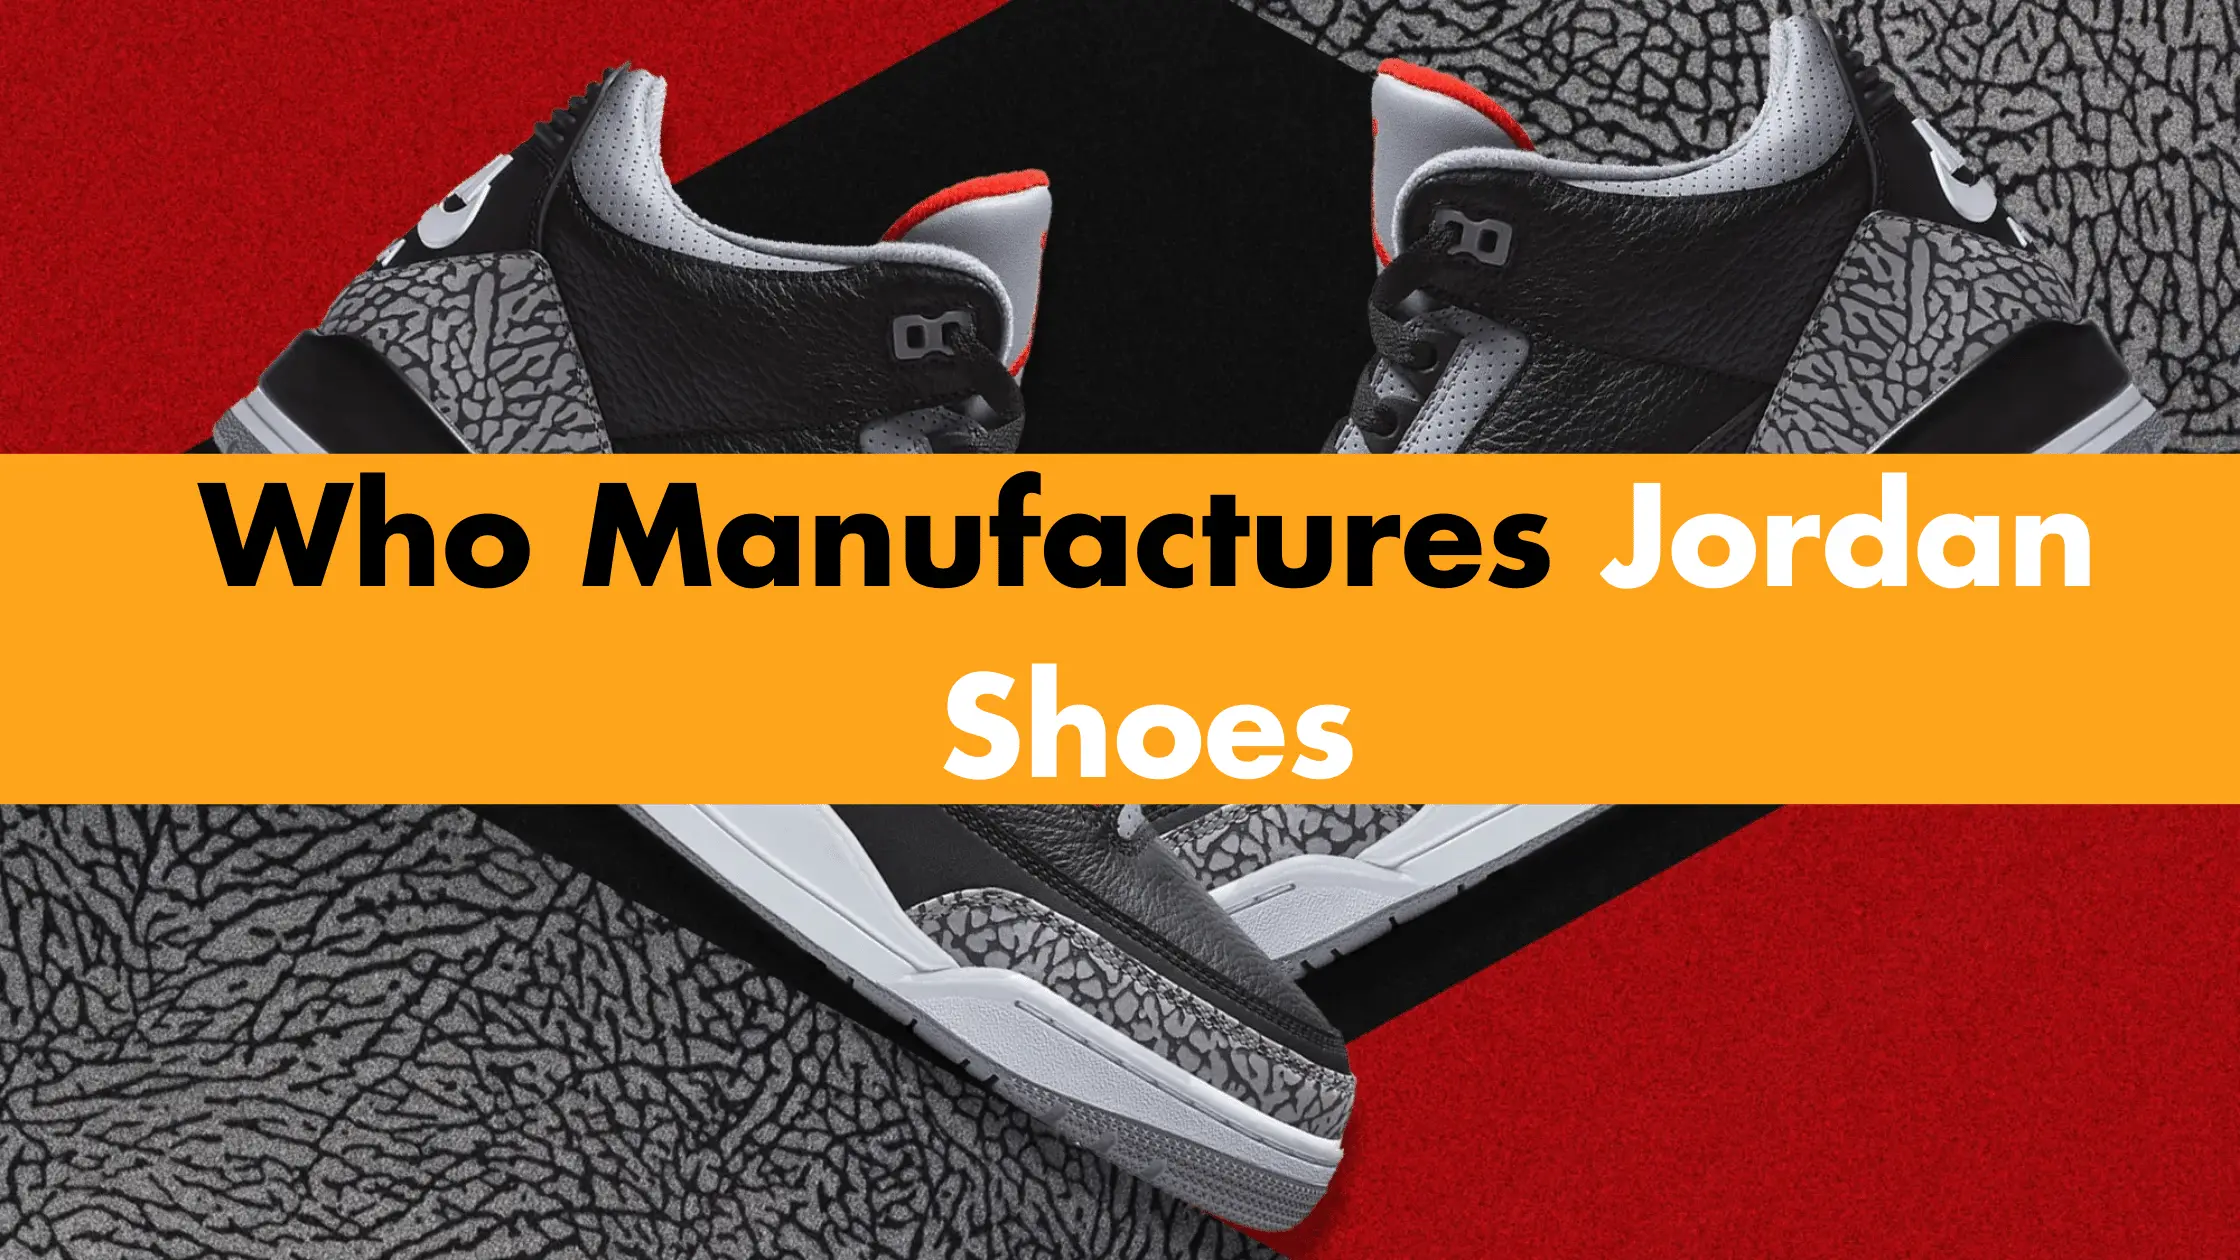 Who Manufactures Jordan Shoes?